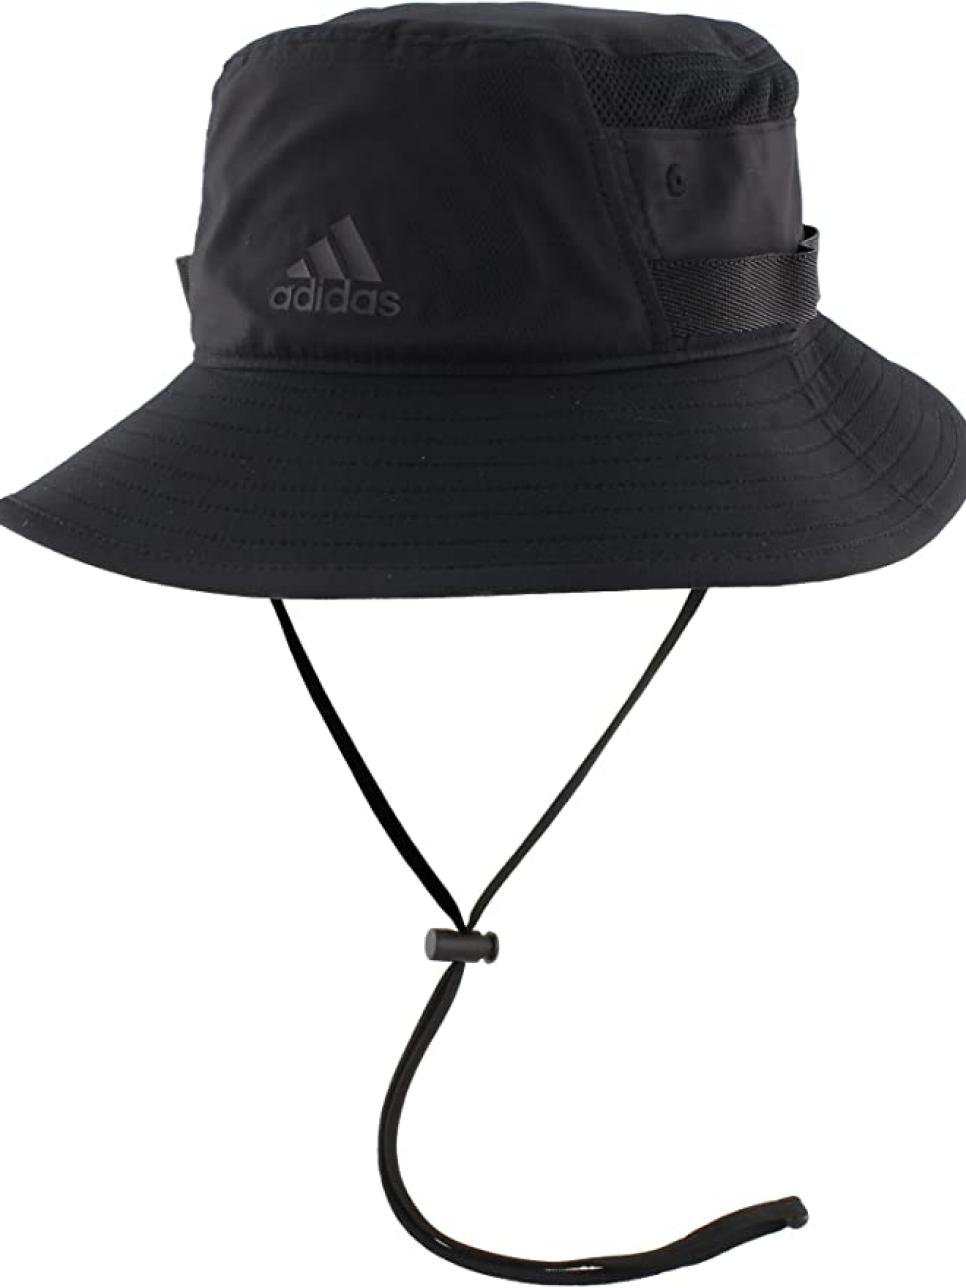 adidas Men's Victory 3 Bucket Hat